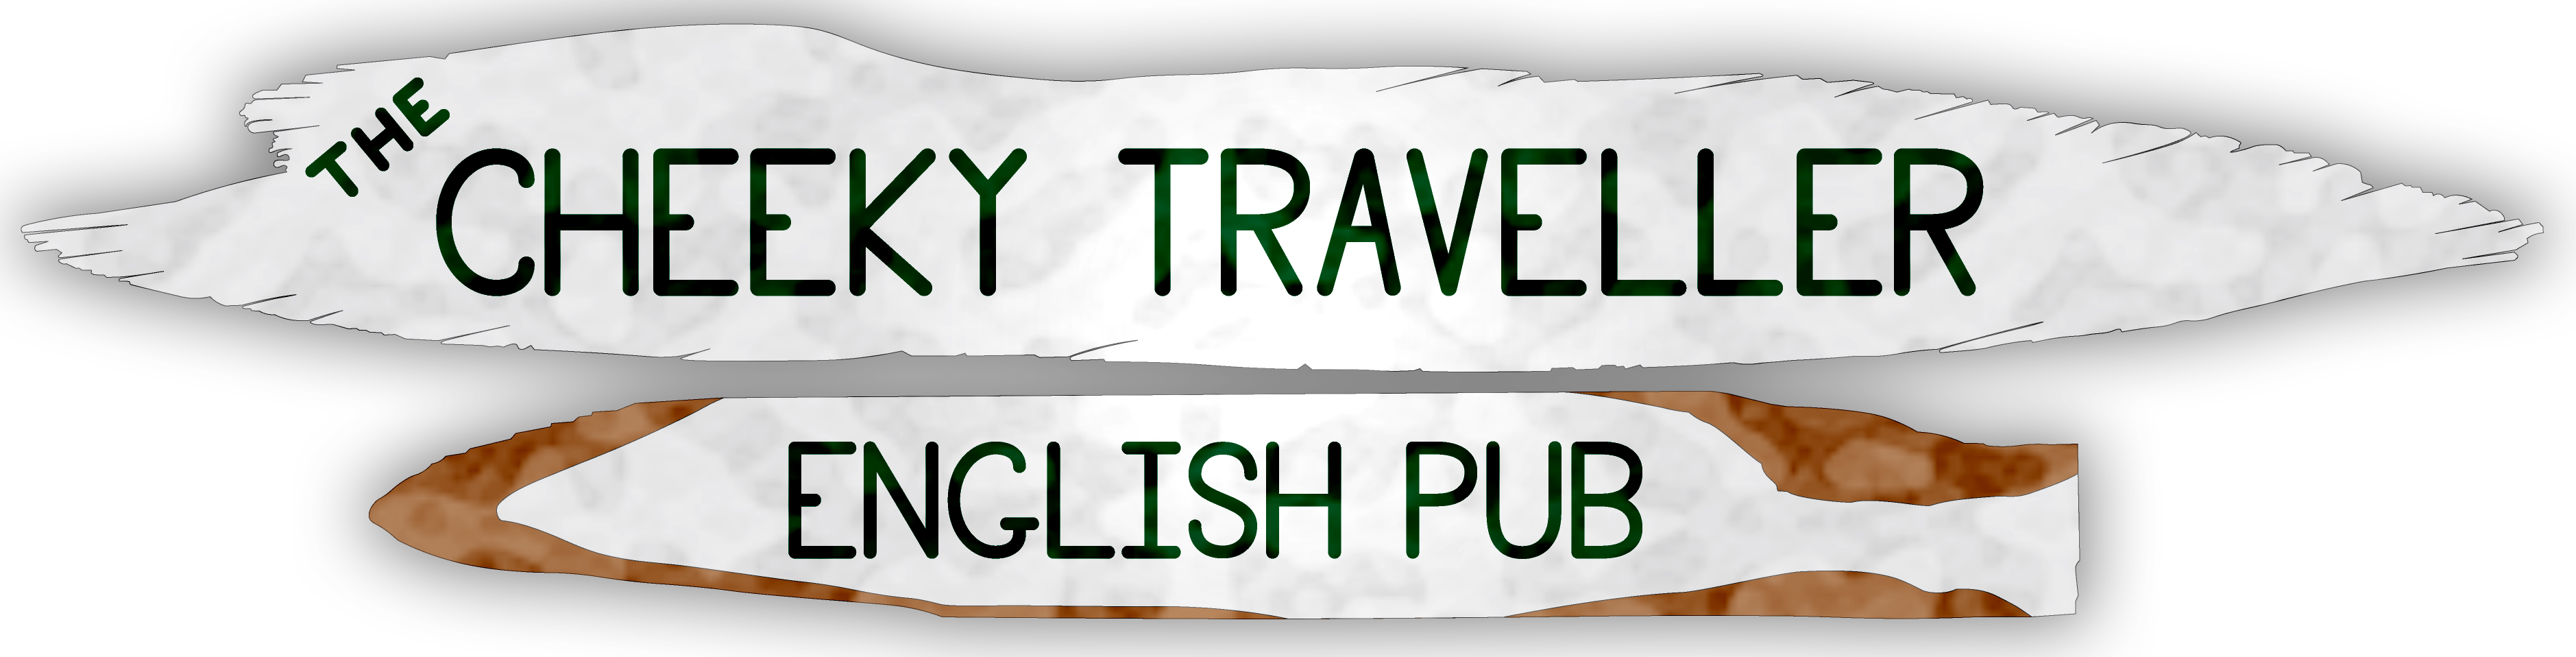 The Cheeky Traveller English Pub and Bar